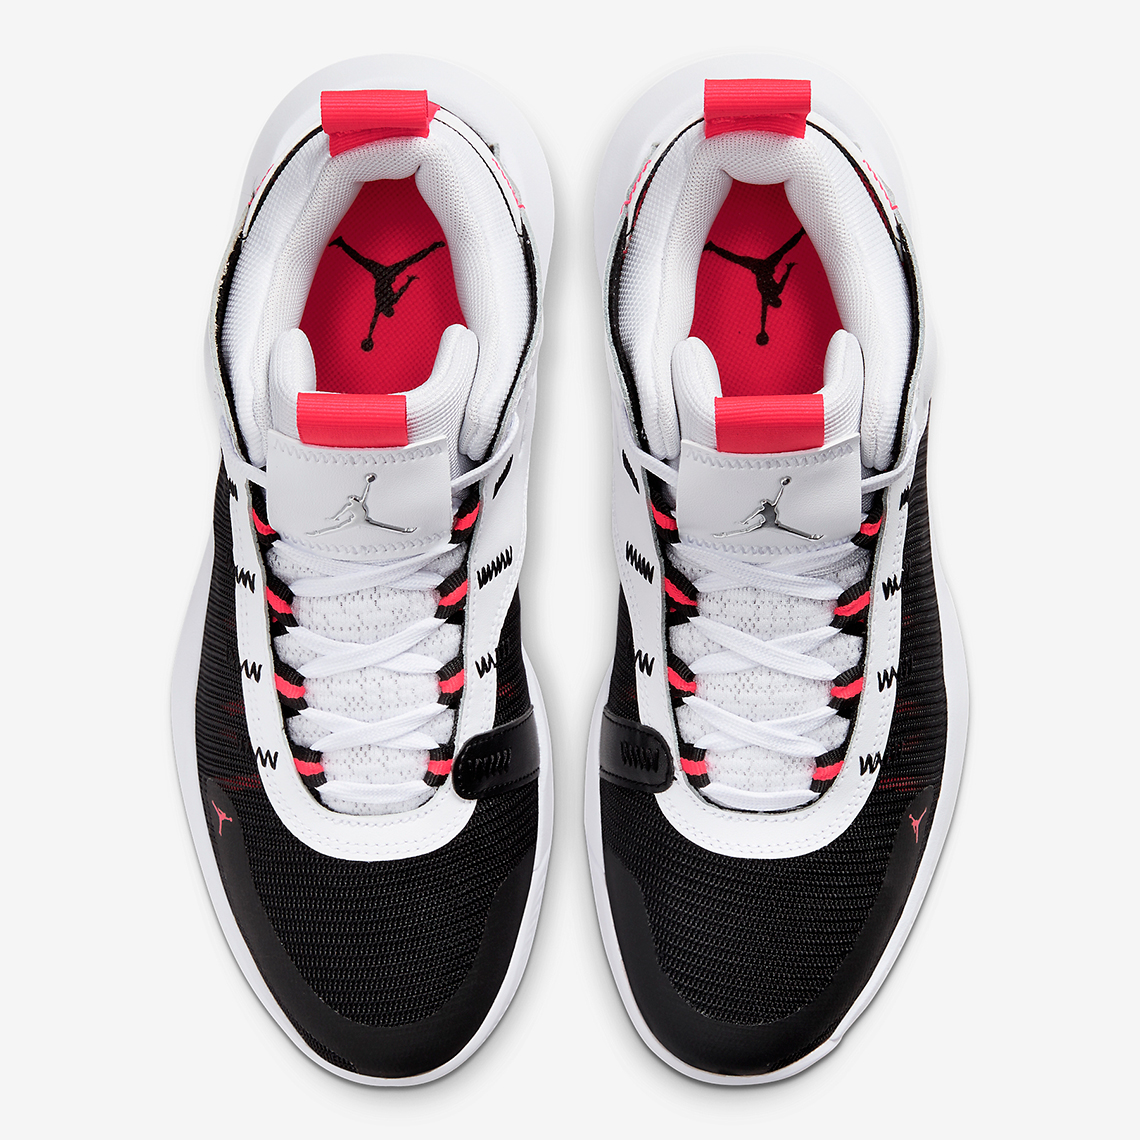 Jordan Jumpman 2020 Pf White Black Red Bq3448 100 1